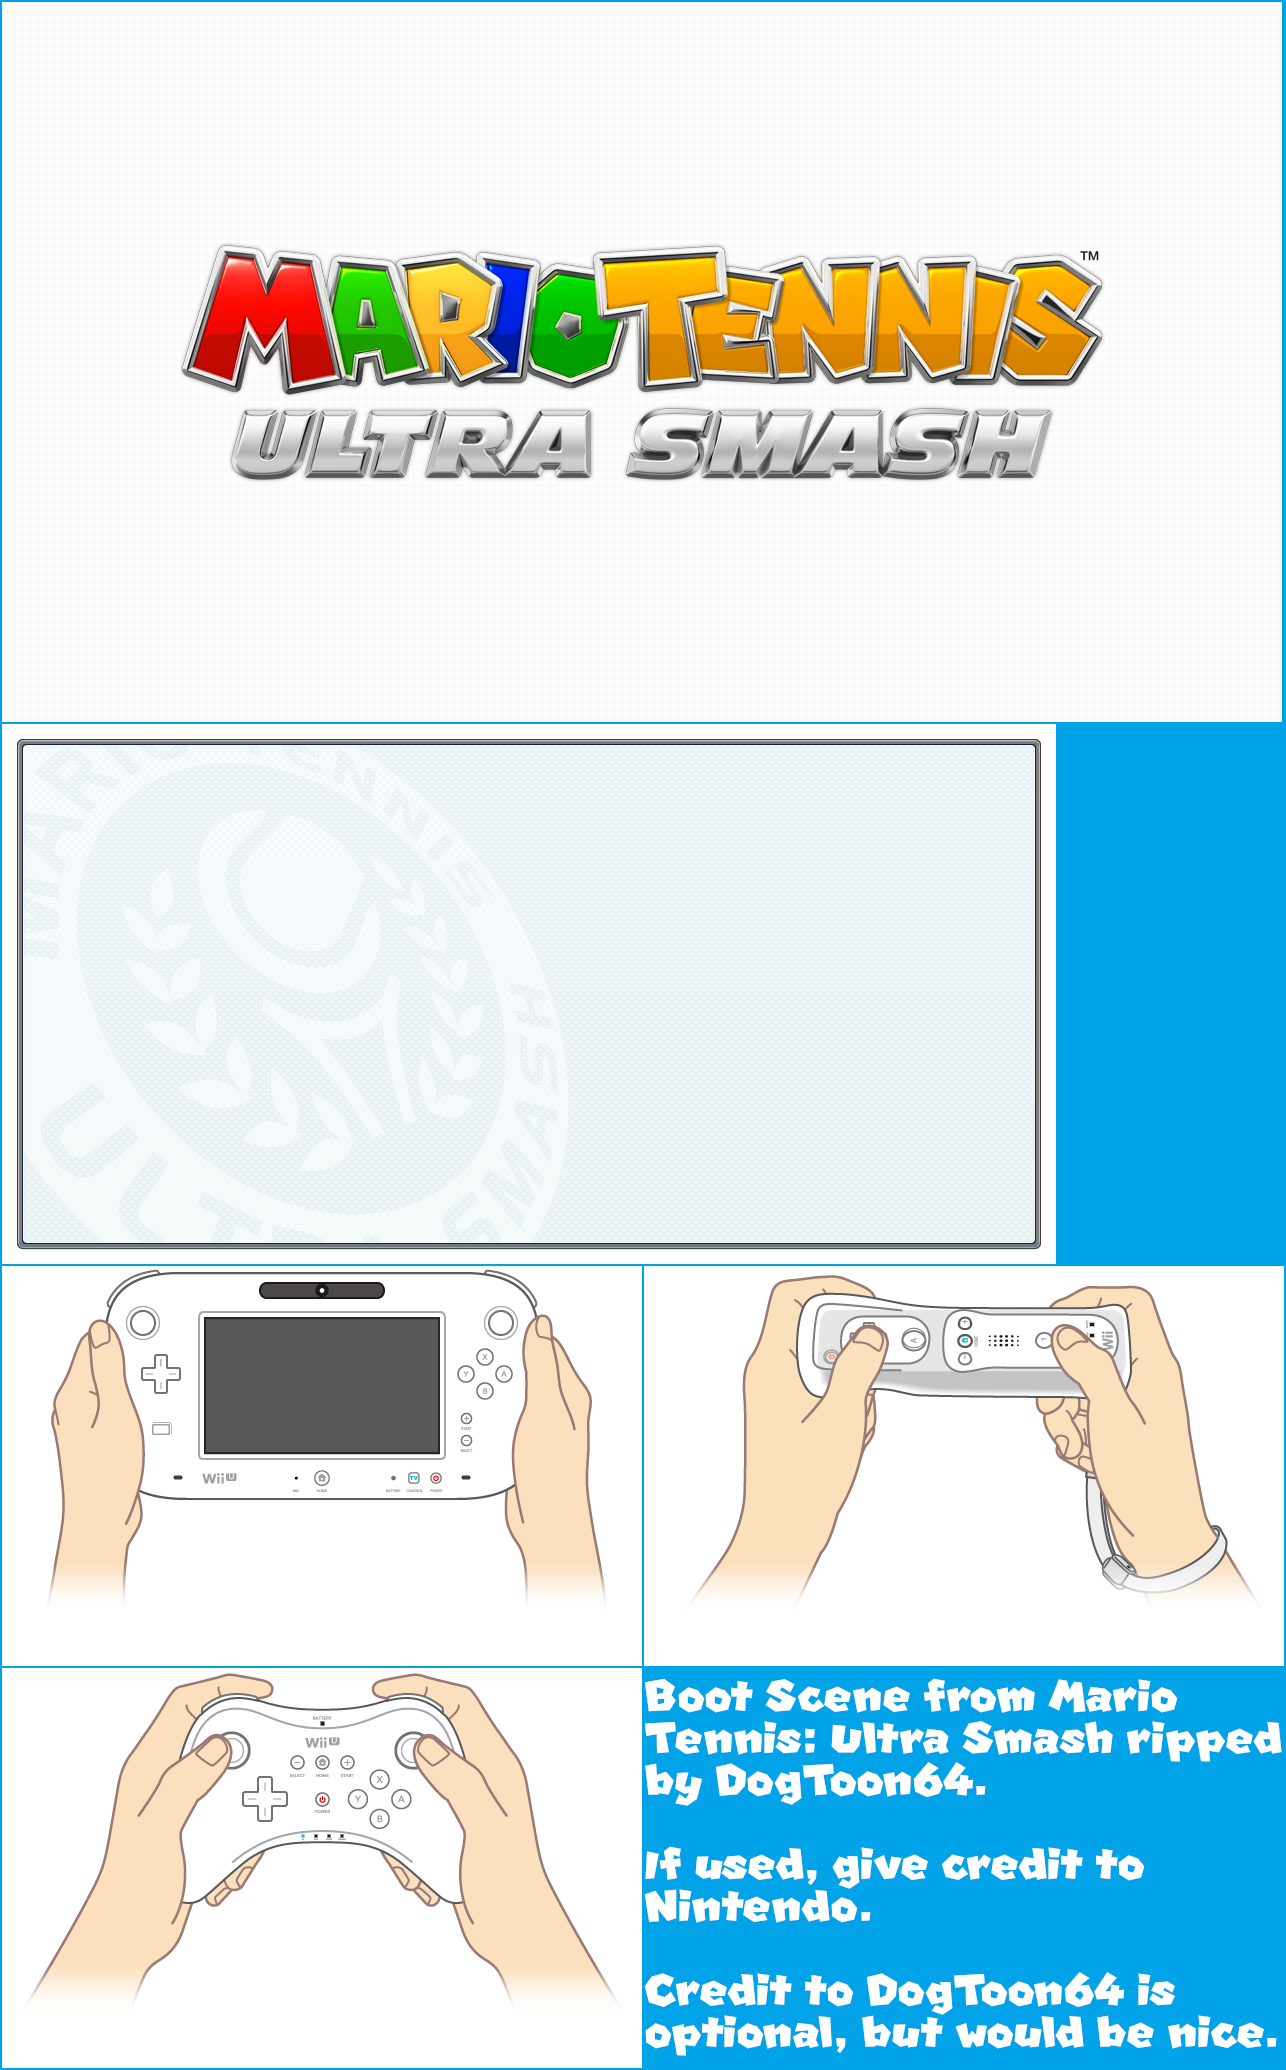 Mario Tennis: Ultra Smash - Boot Scene